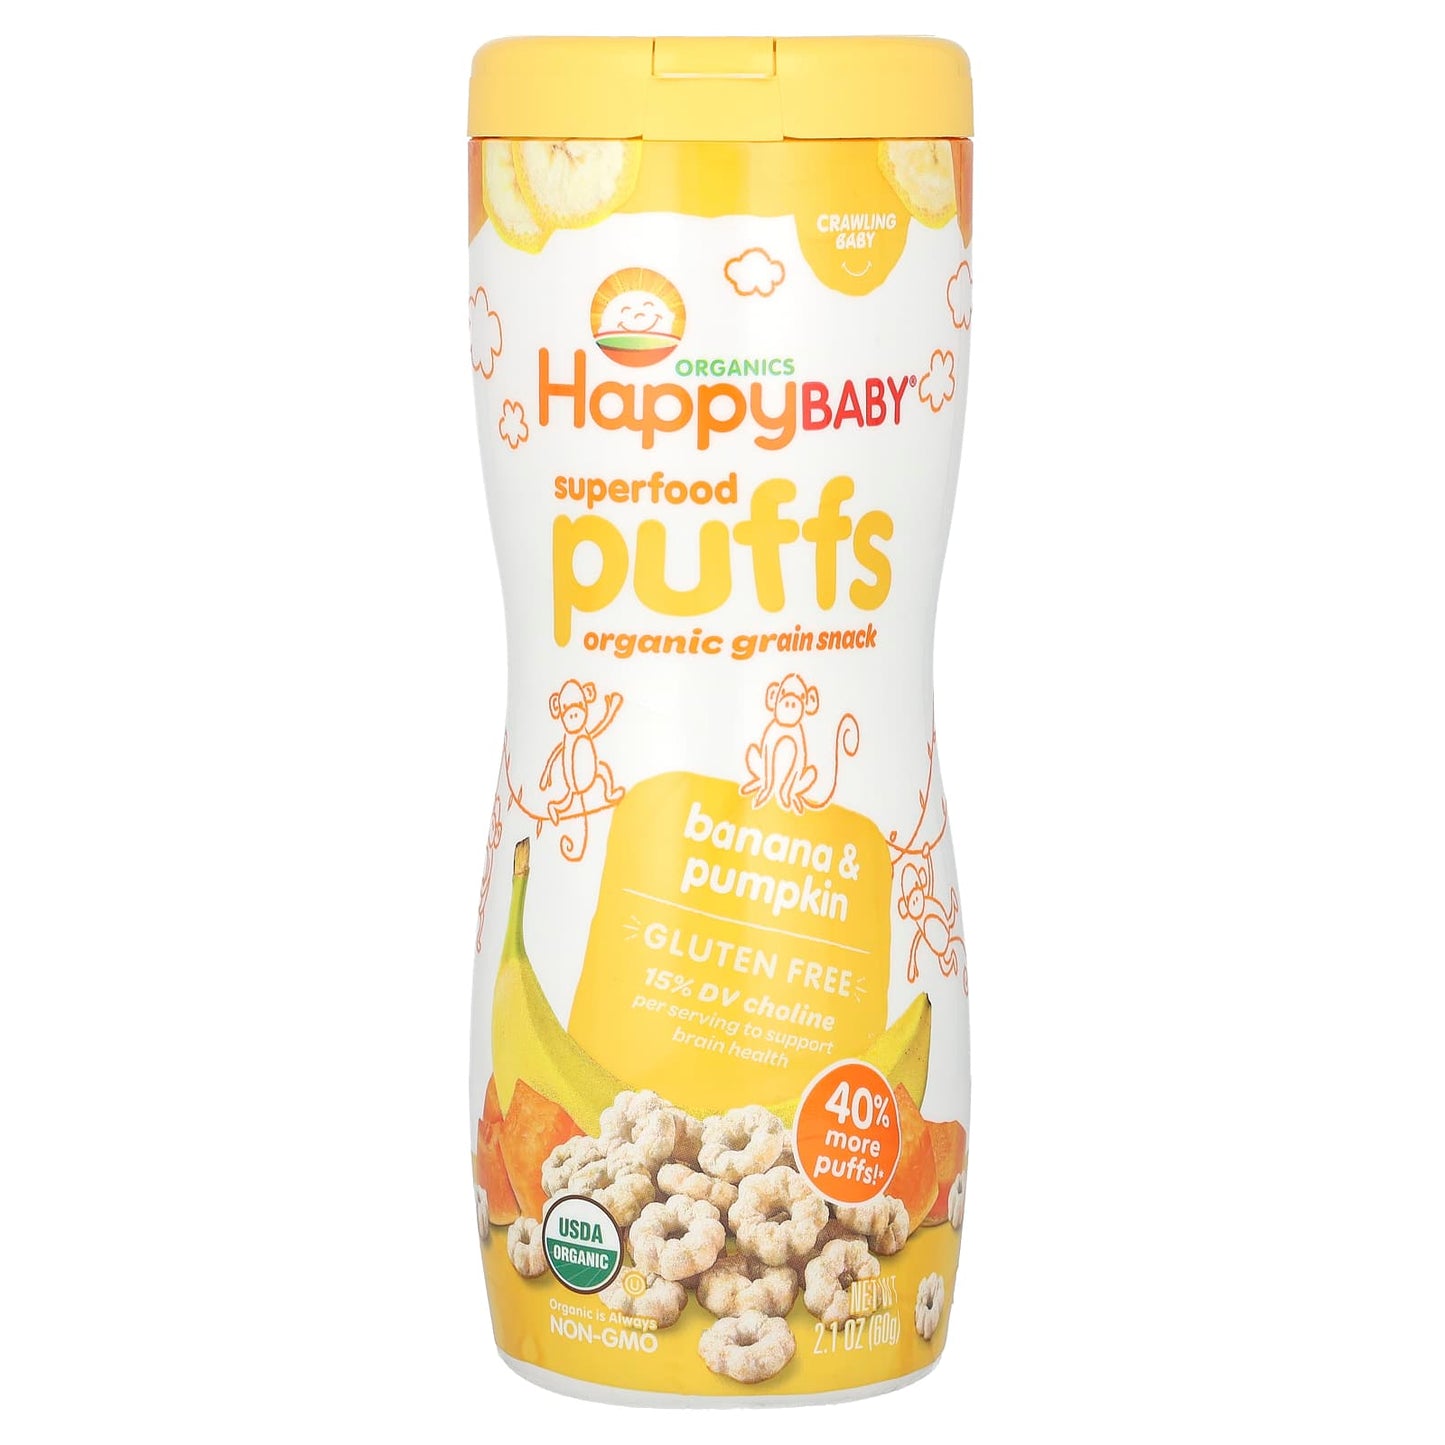 Happy Family Organics-Superfood Puffs-Organic Grain Snack-Banana & Pumpkin-2.1 oz (60 g)